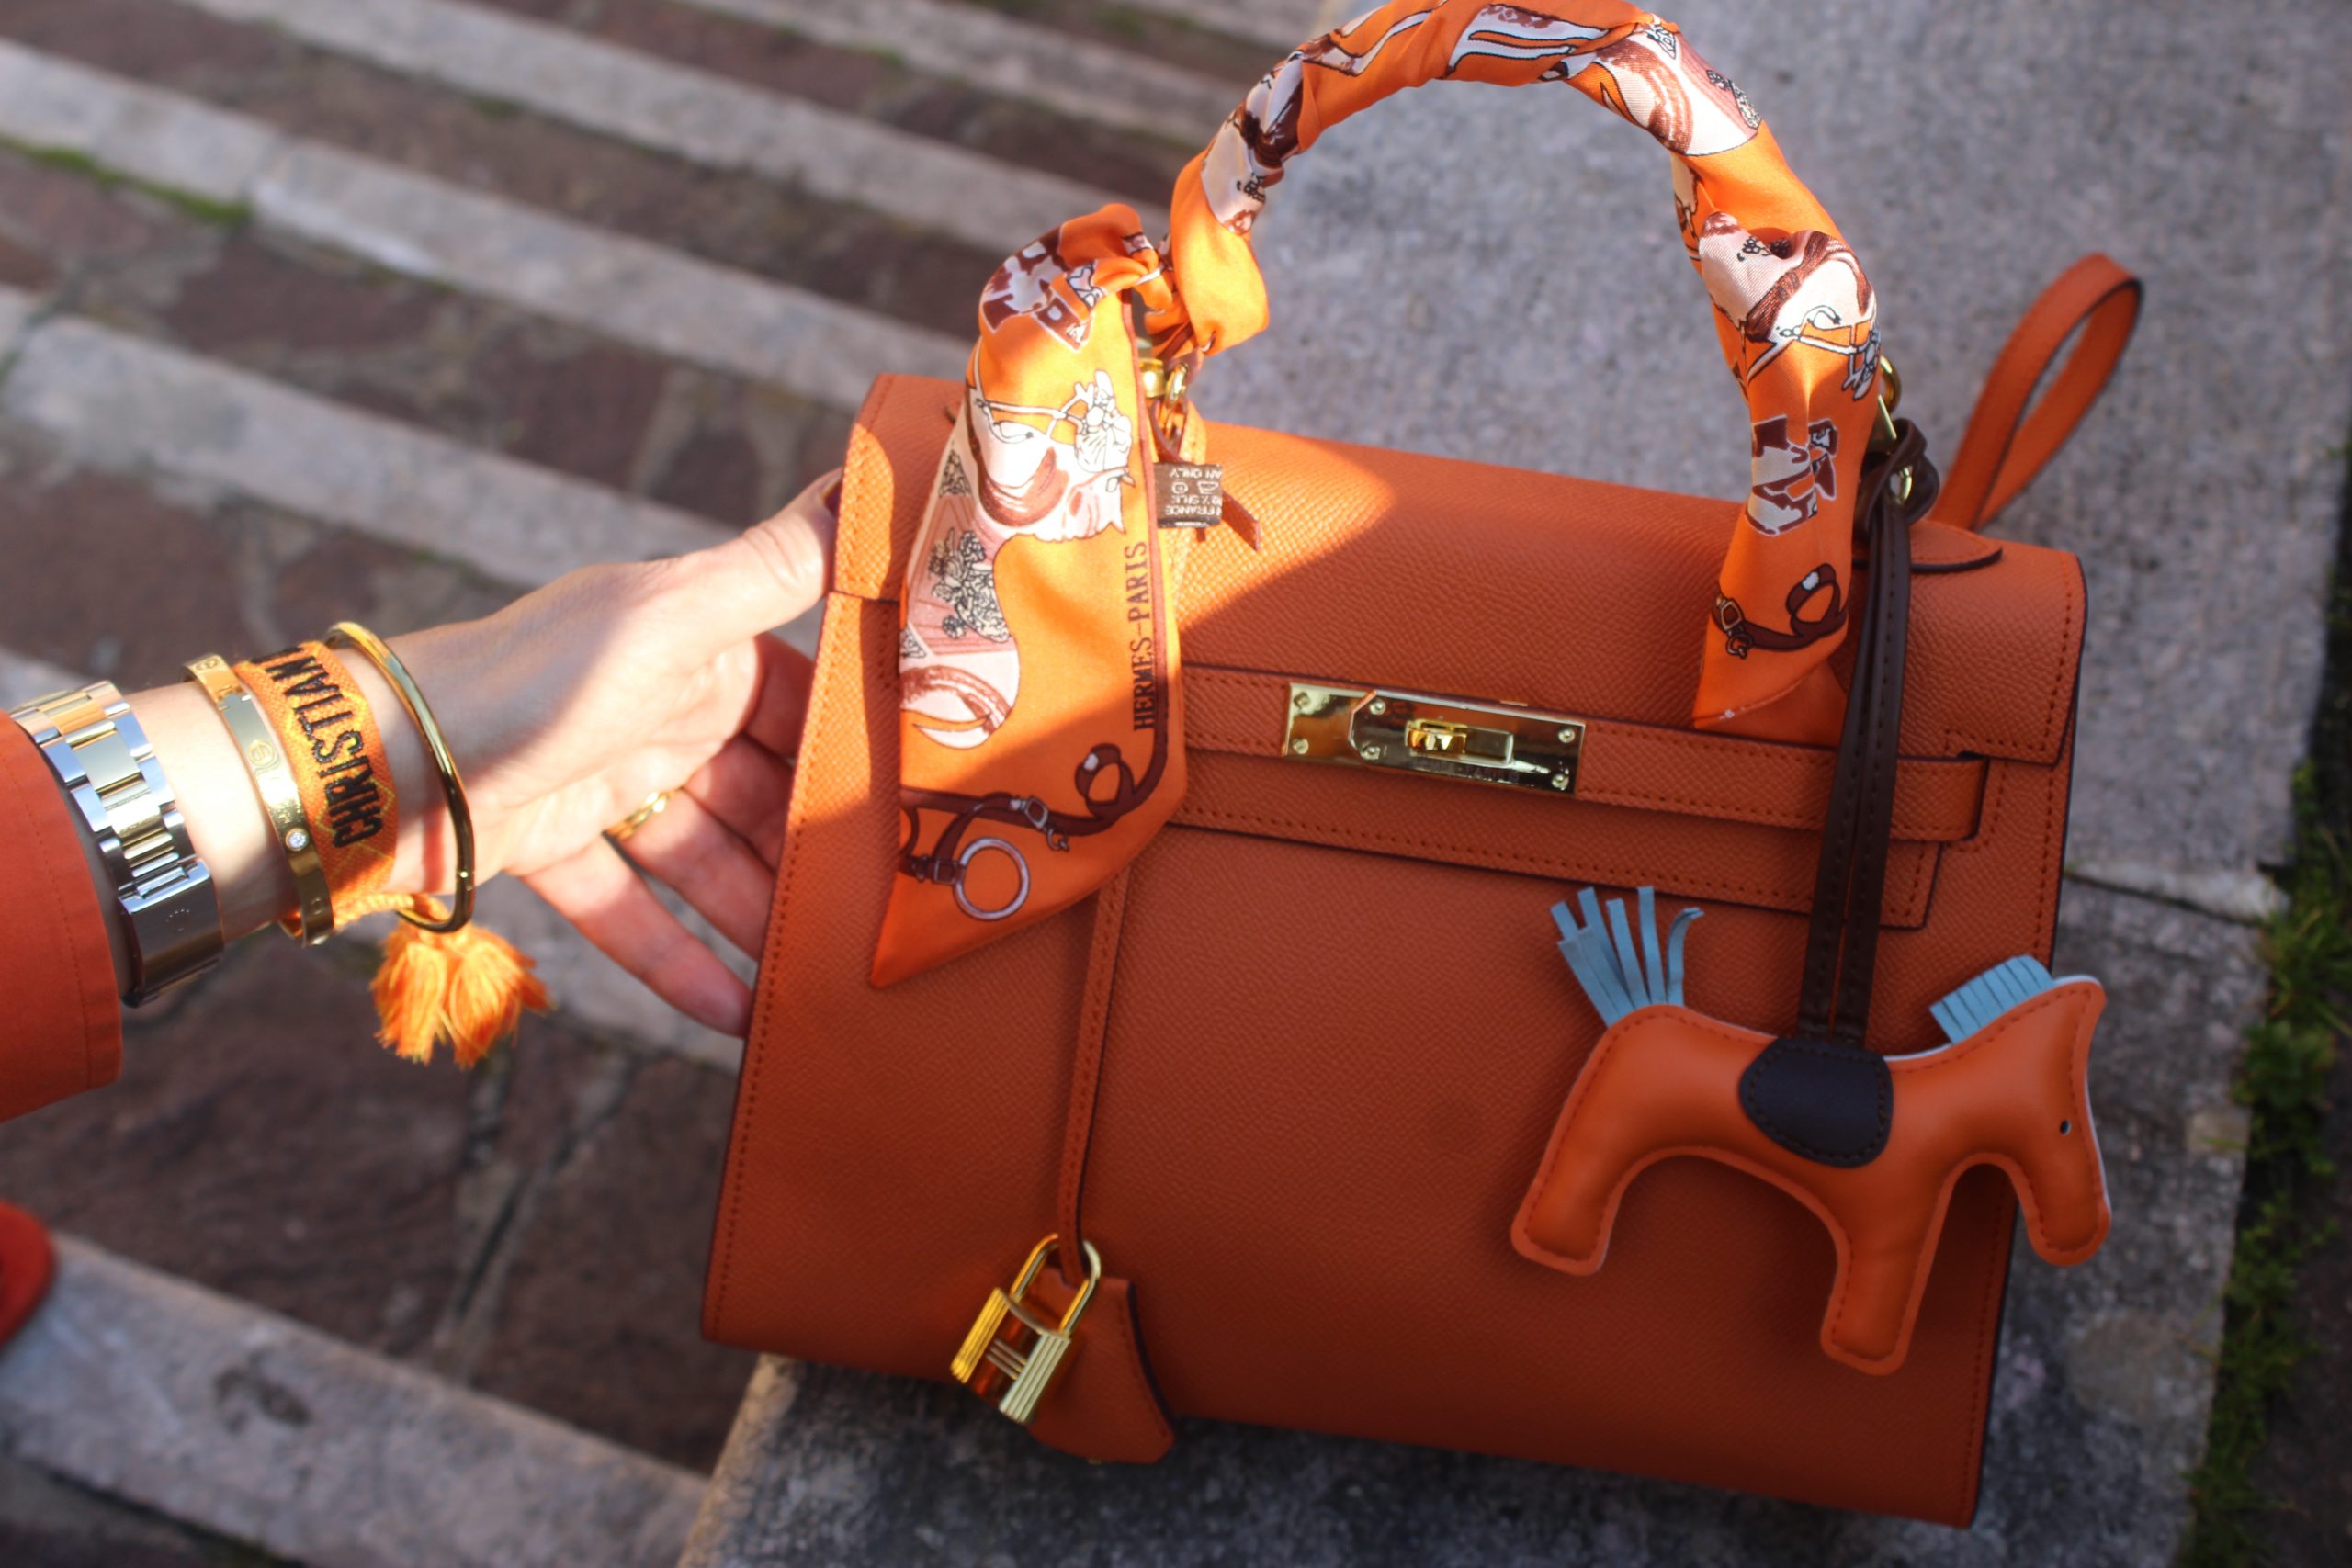 Bright Orange Spring Boho Look Hermes Bag Dolce & Gabbana Outfit